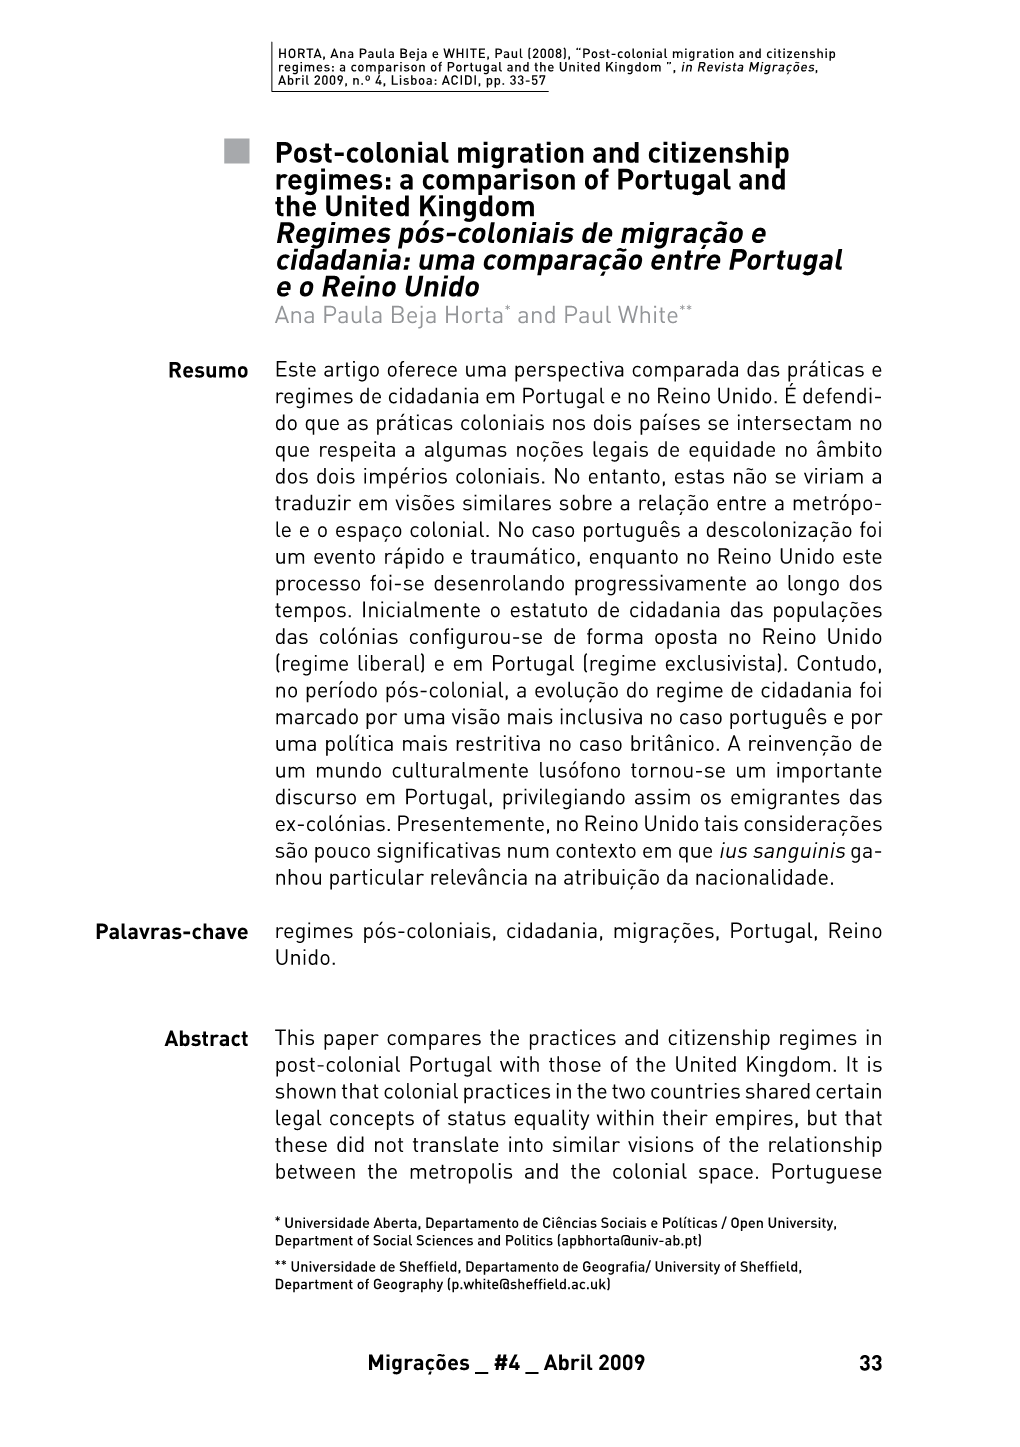 Post-Colonial Migration and Citizenship Regimes: a Comparison of Portugal and the United Kingdom ”, in Revista Migrações, Abril 2009, N.º 4, Lisboa: ACIDI, Pp